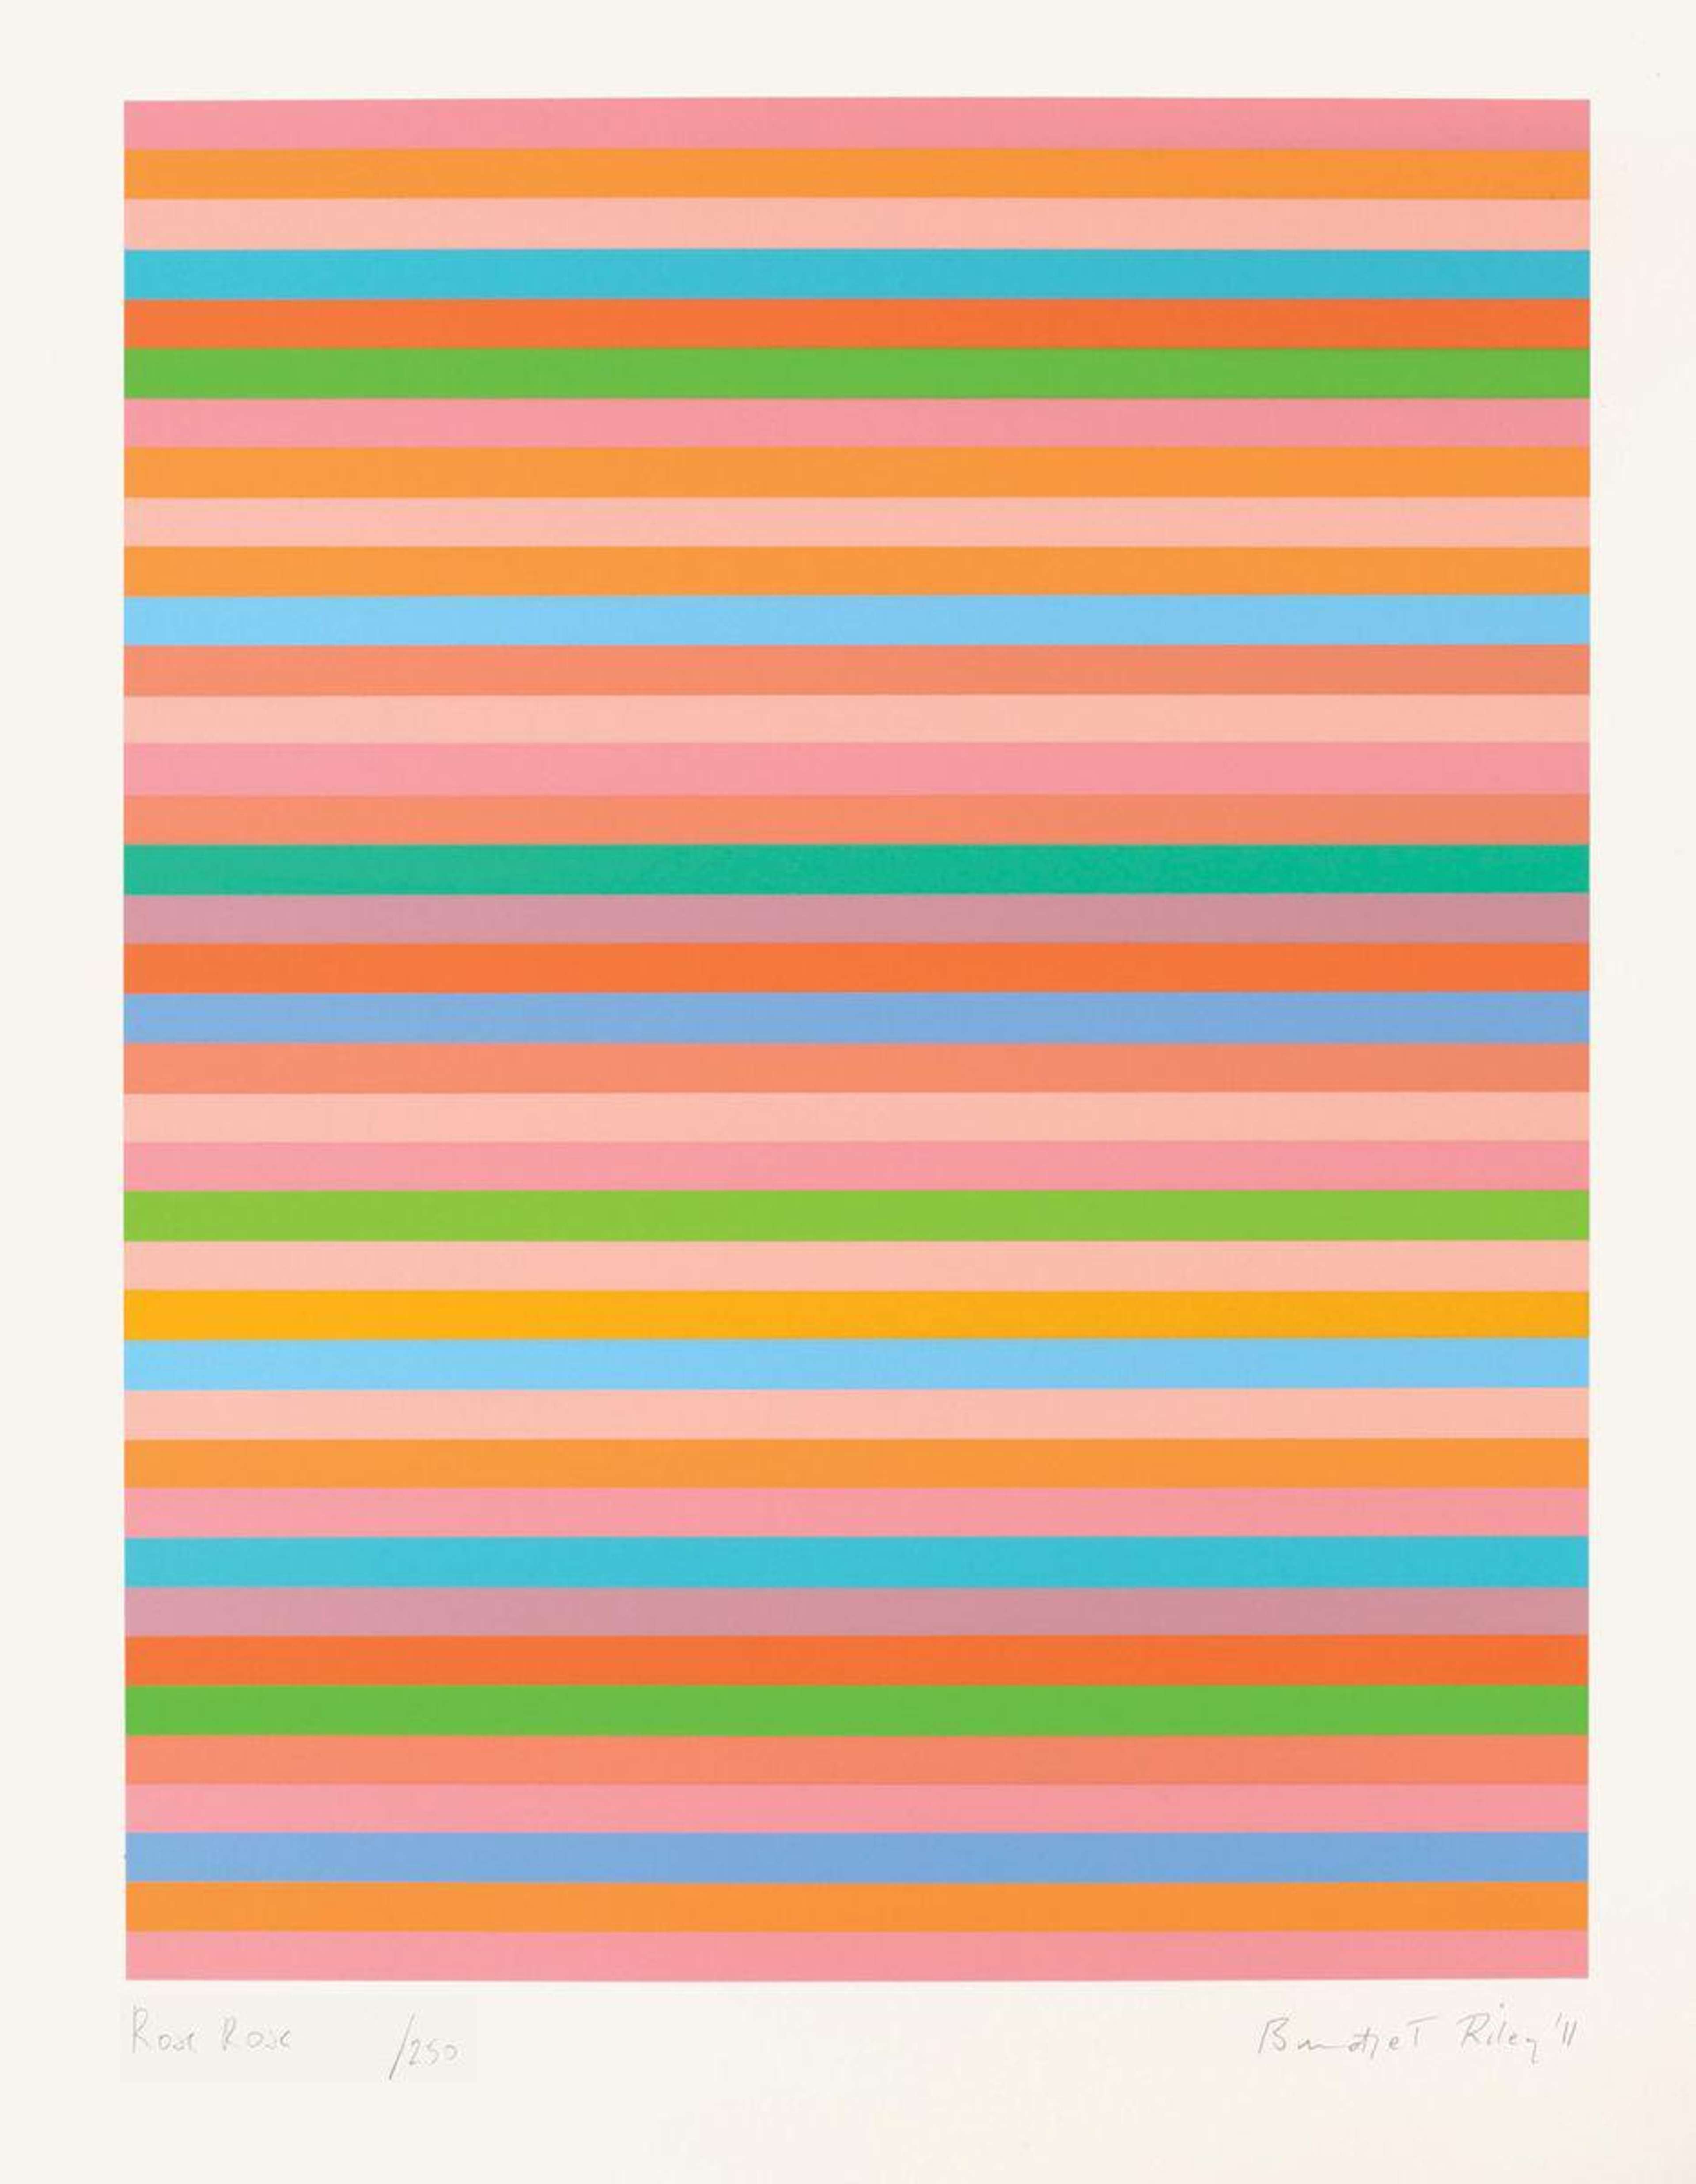 Bridget Riley’s Rose Rose. An optical illusion of multi-coloured horizontal stripes.  